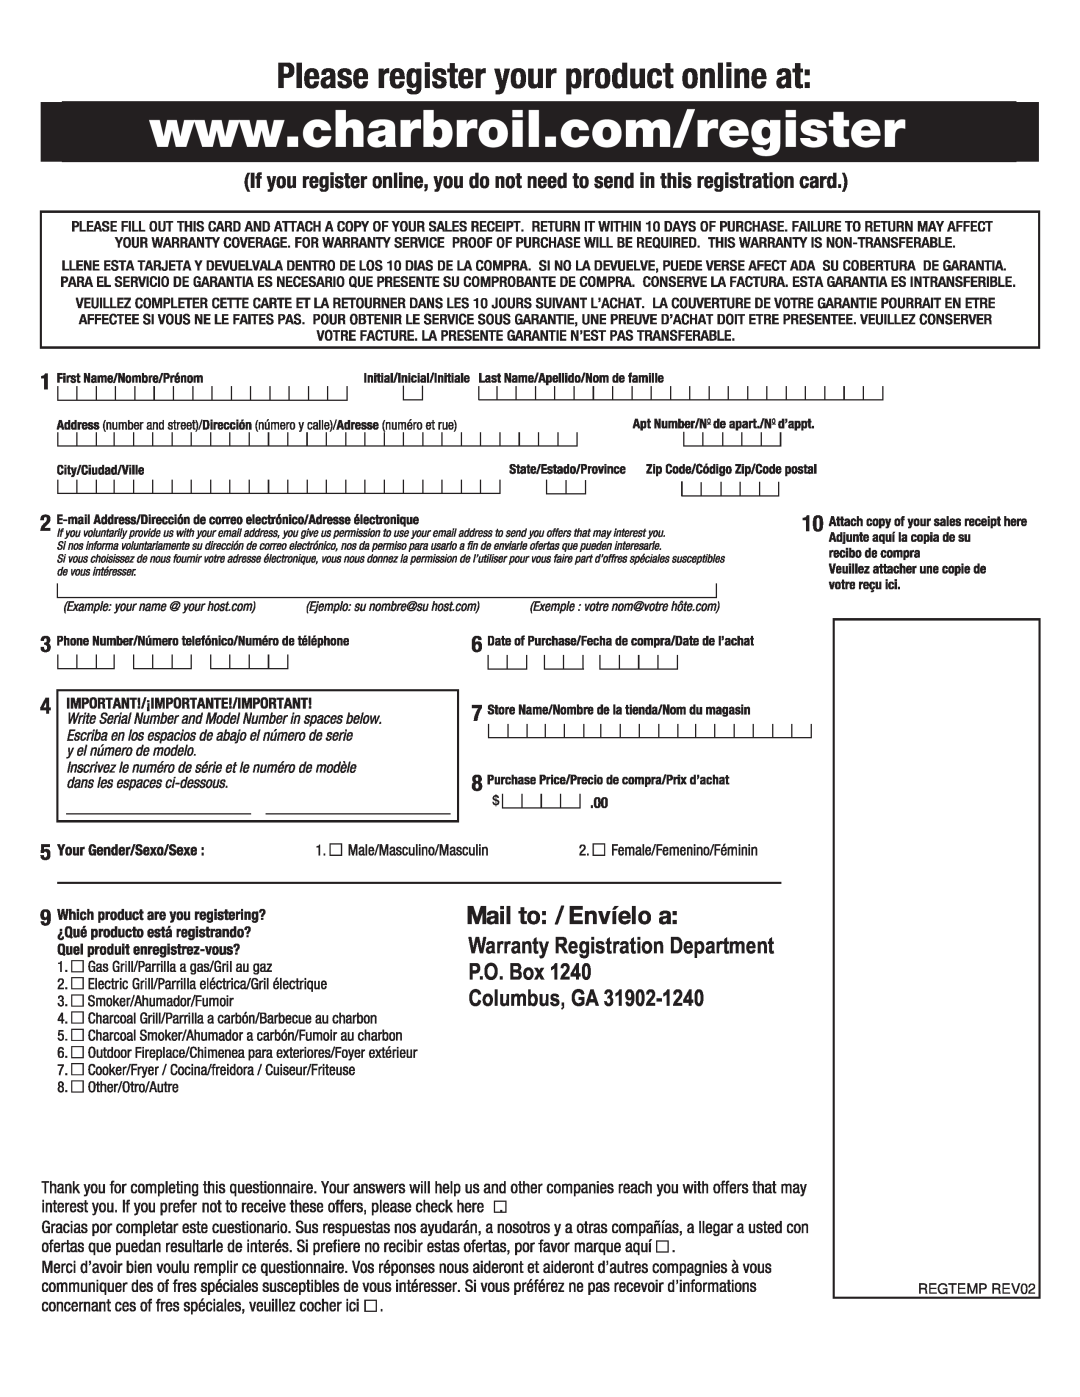 Char-Broil 10101480 manual Warranty Registration Department P.O. Box Columbus, GA, REGTEMP REV02 